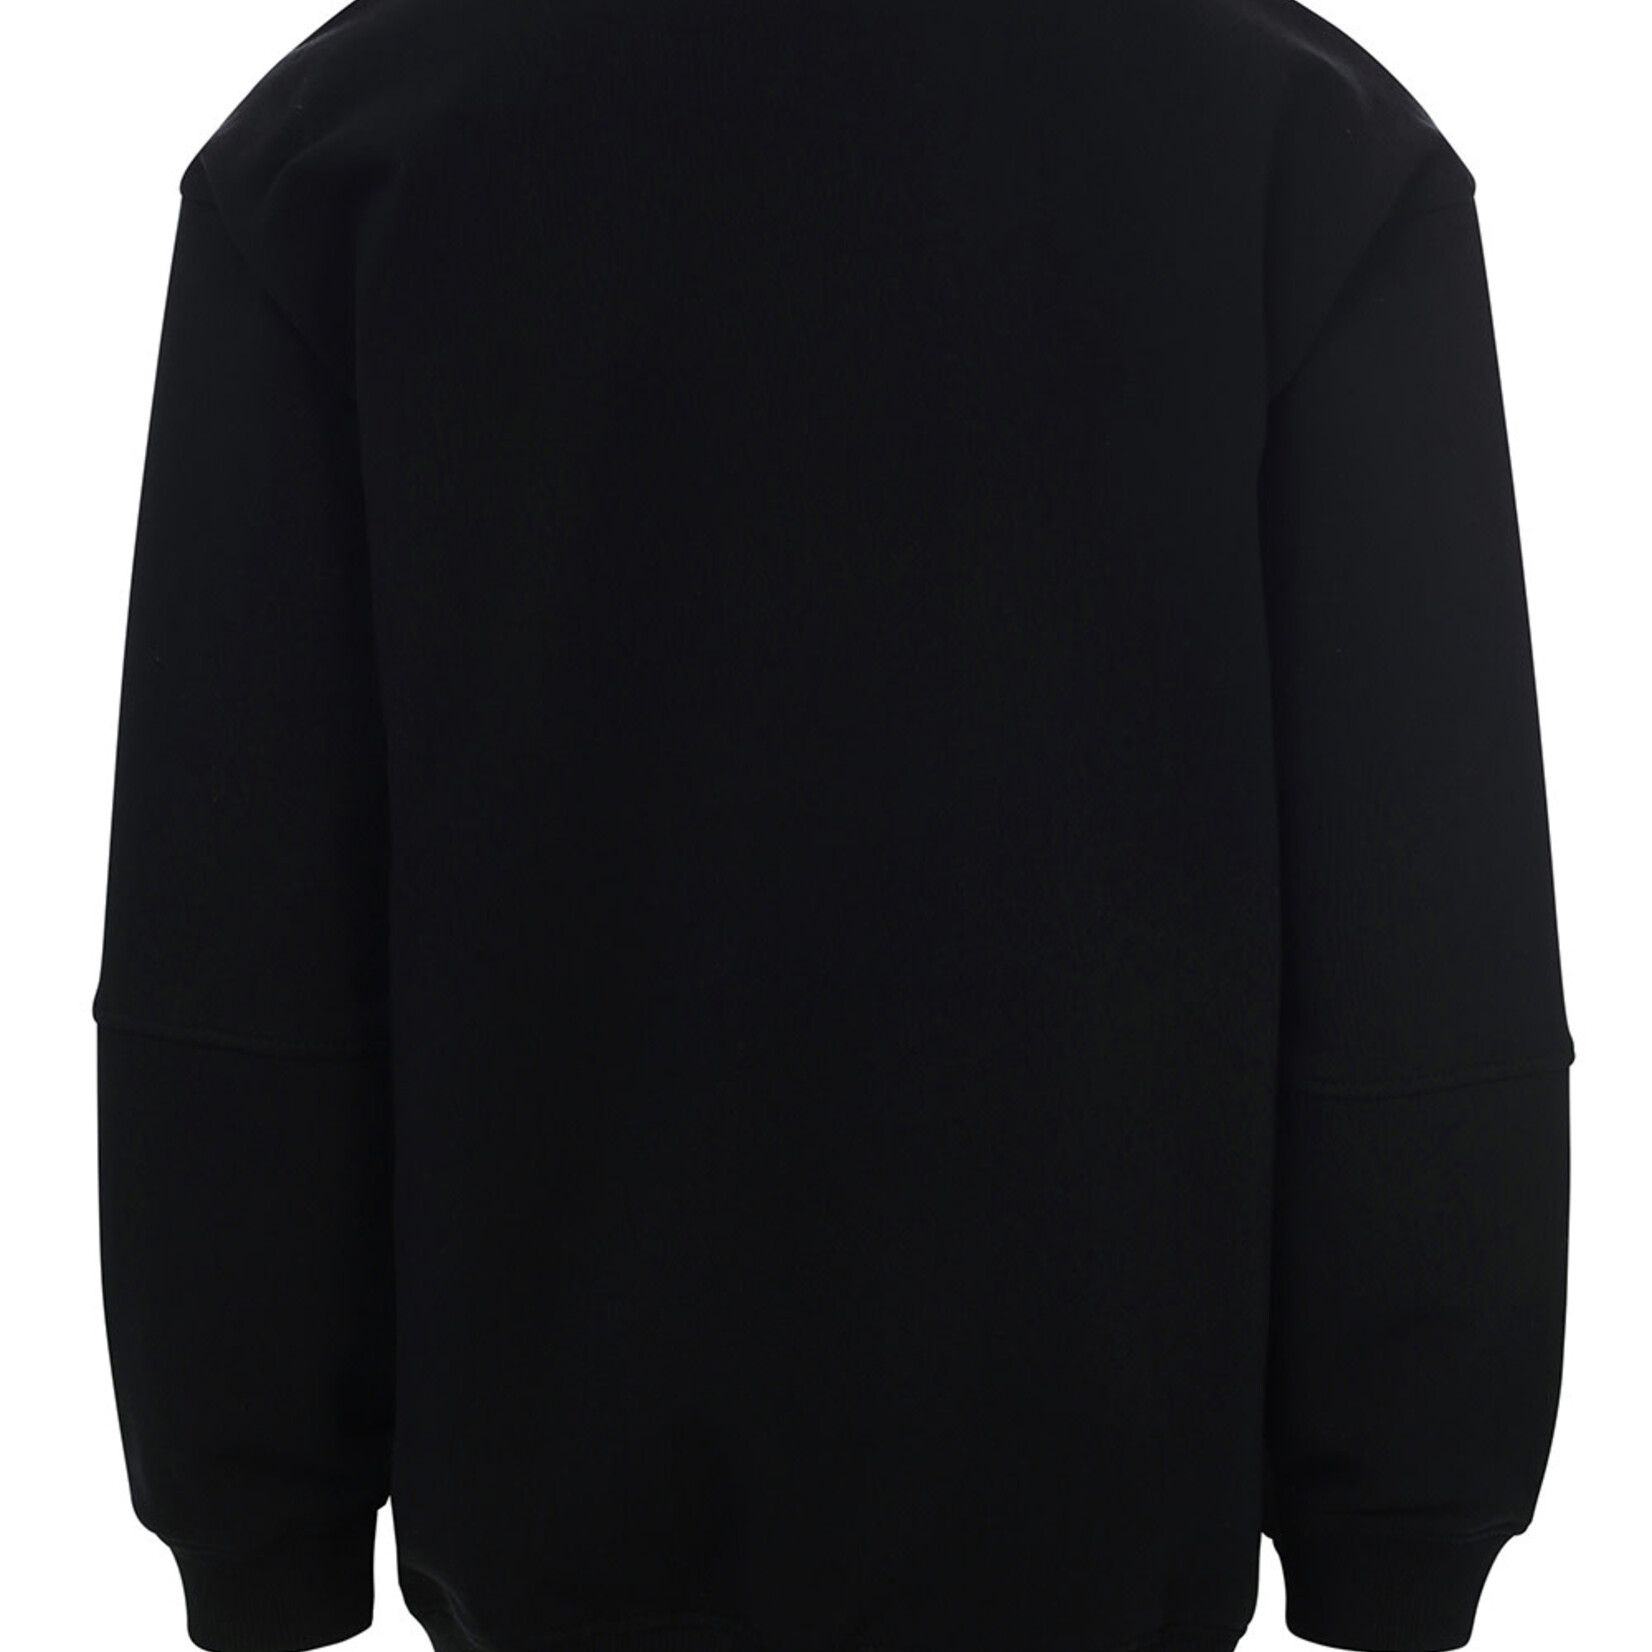 Looxs 10sixsteen 10Sixsteen Long Sweater black